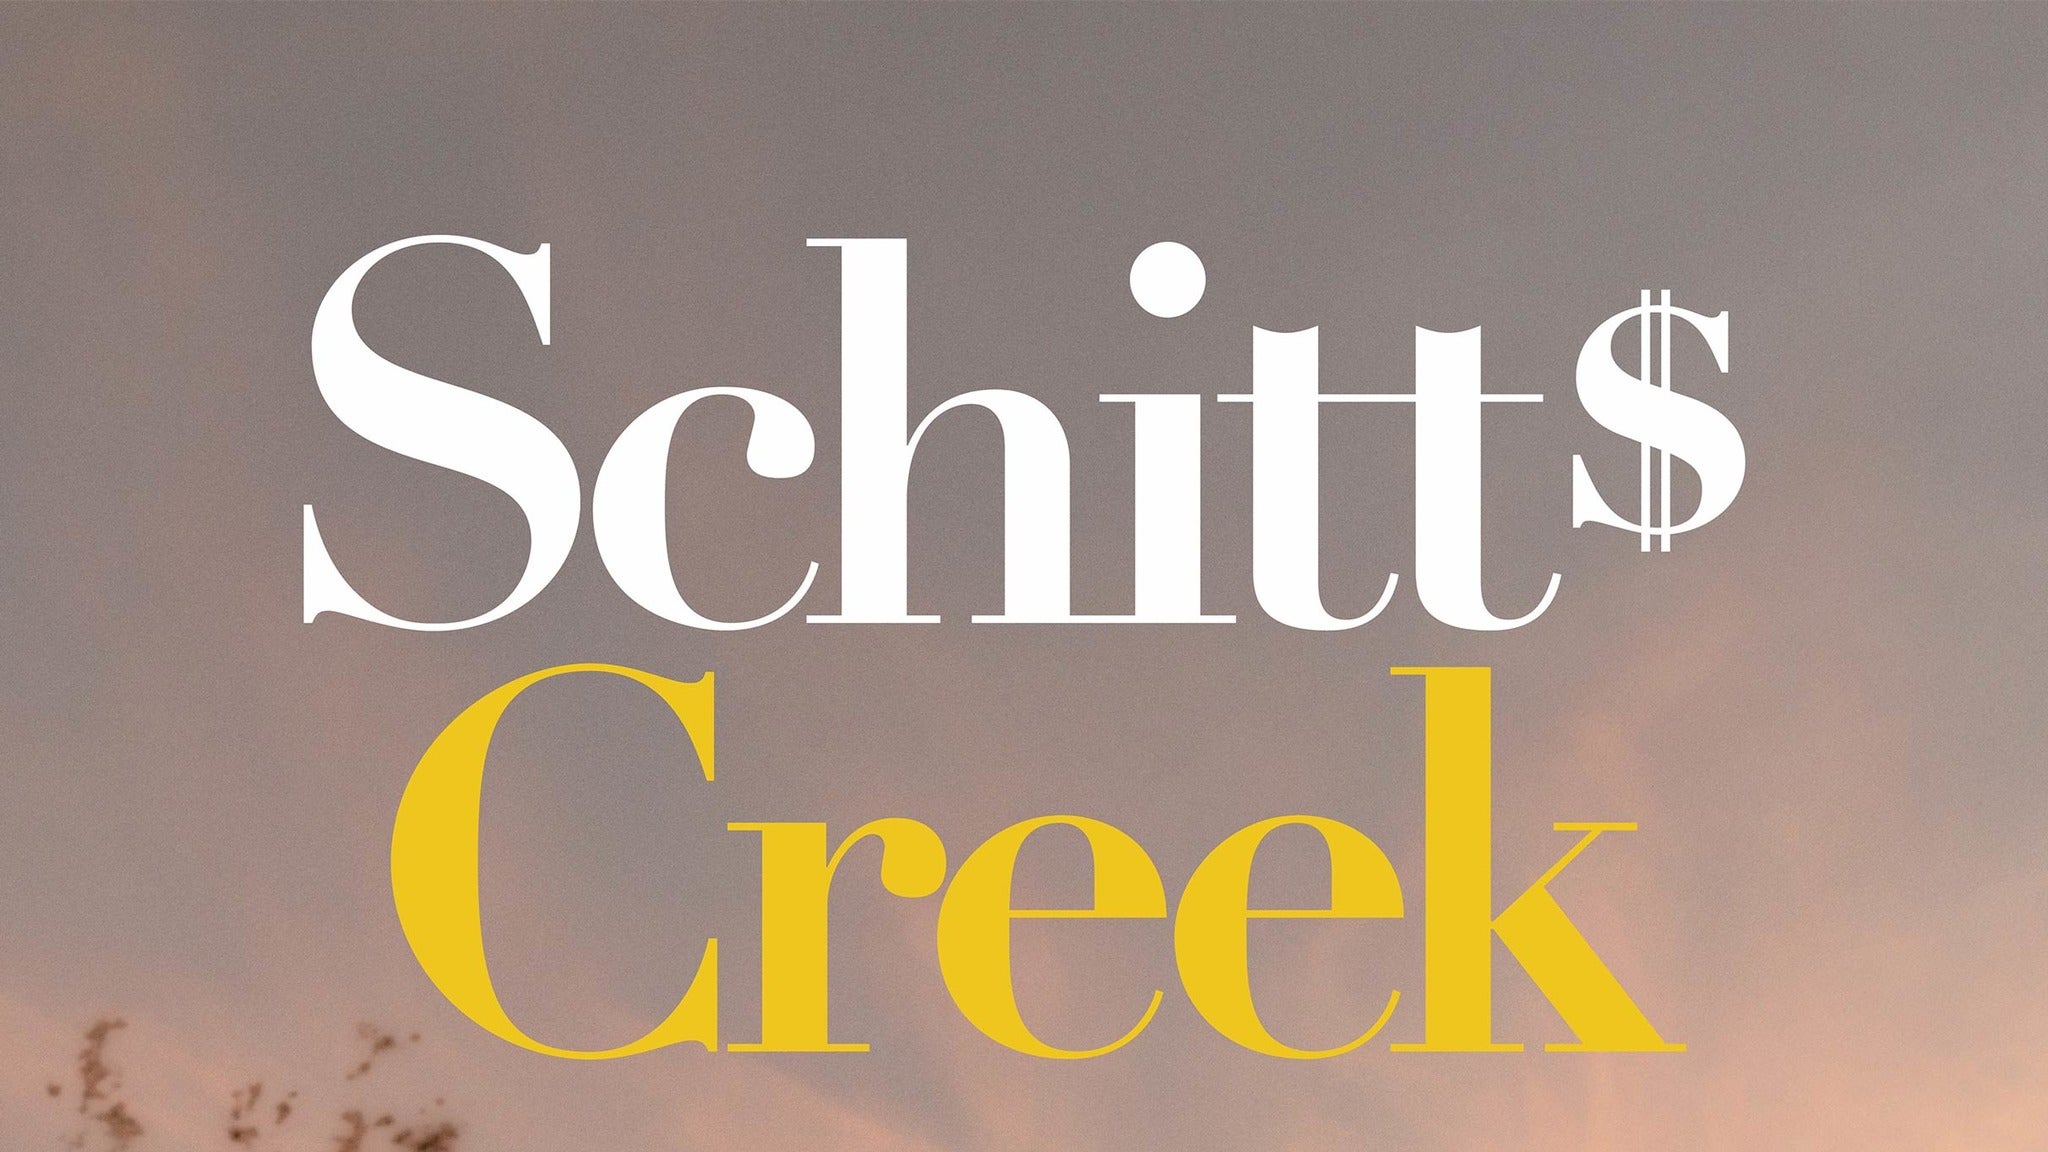 Schitt's Creek: The Farewell Tour in Uncasville promo photo for Select Momentum Club Member presale offer code